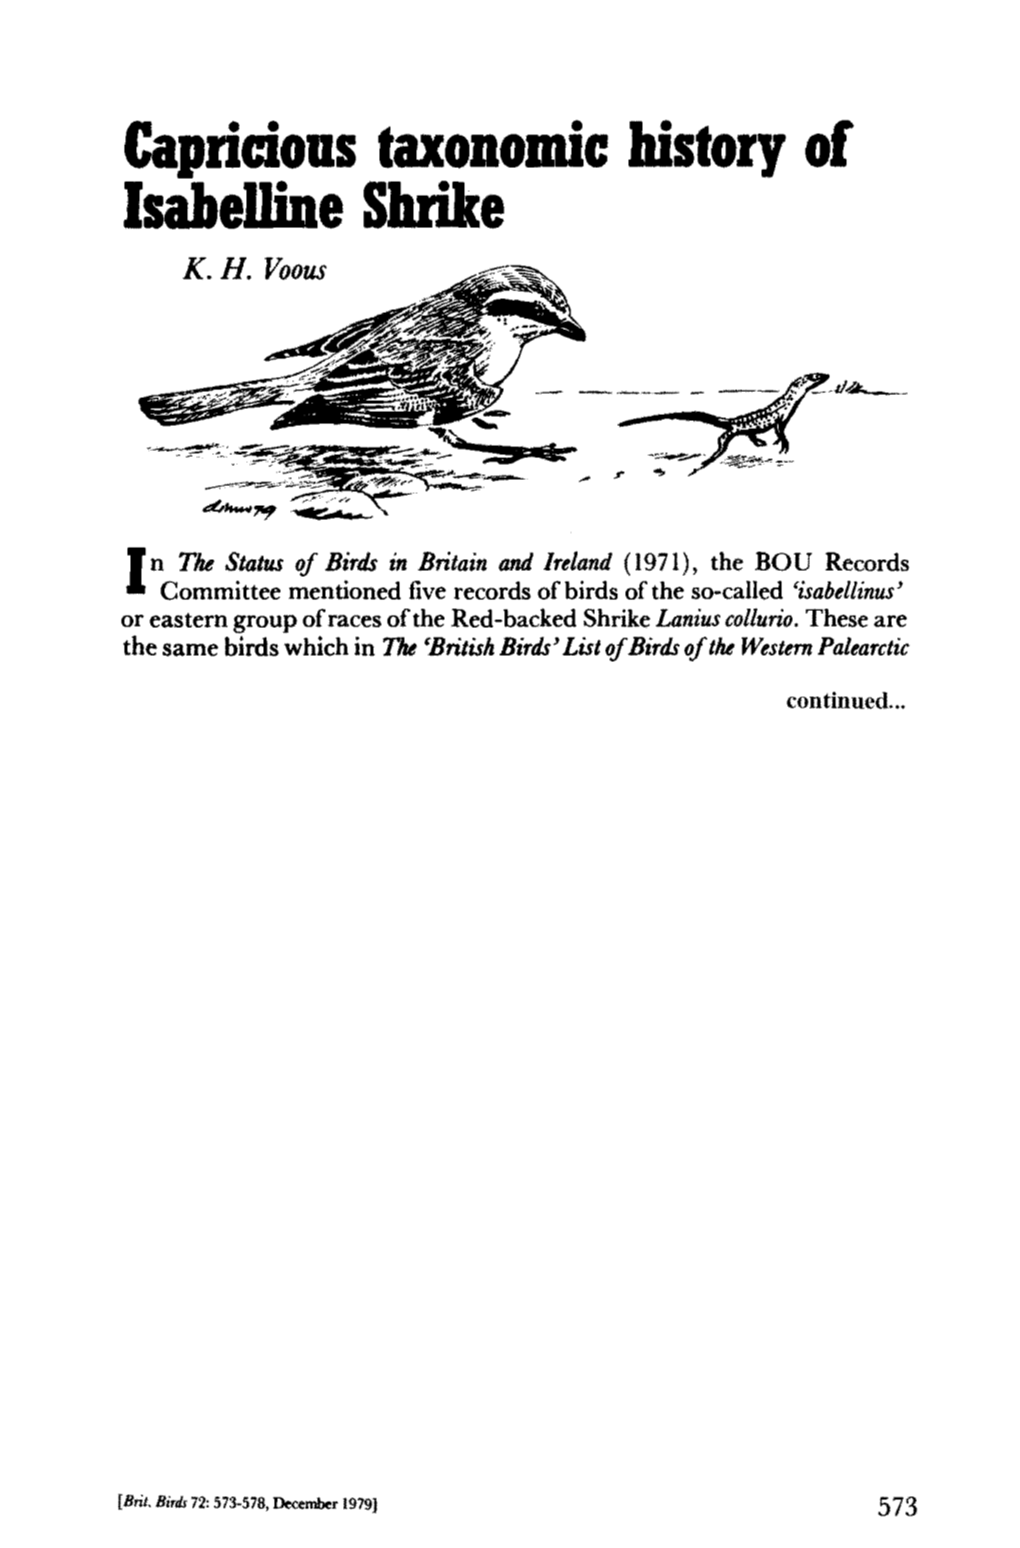 Capricious Taxonomic History of Isabelline Shrike